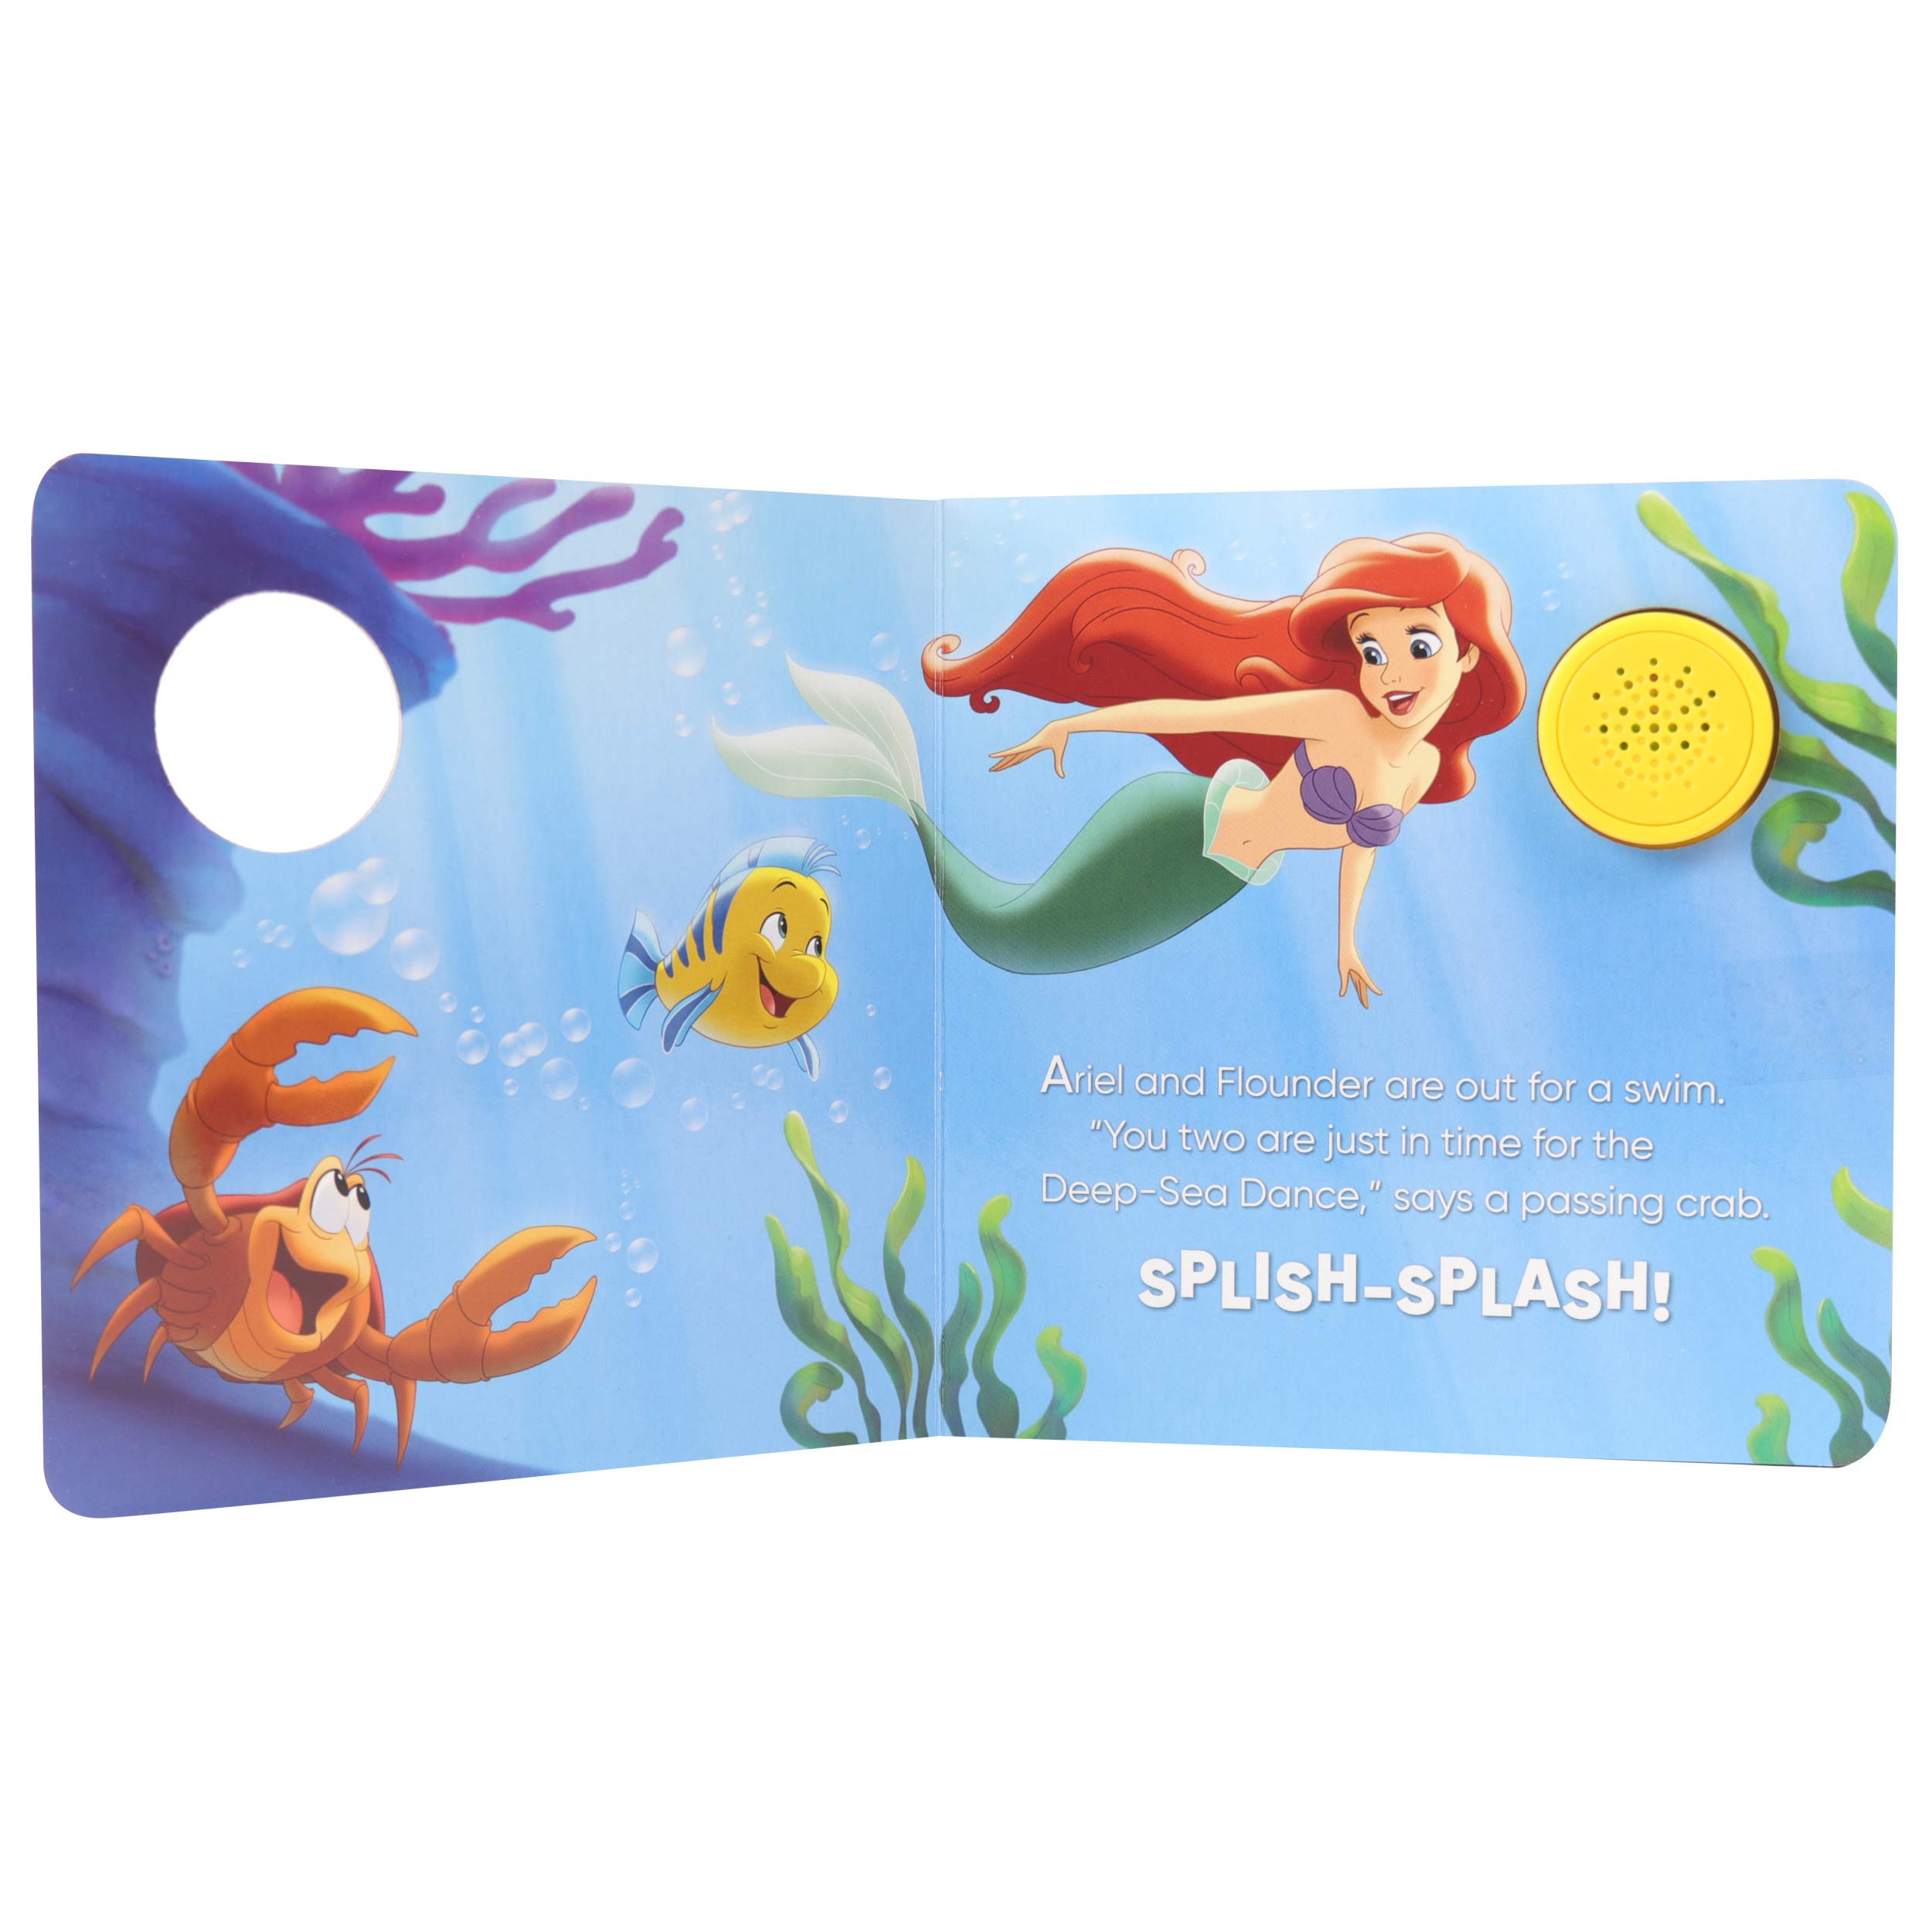 Disney Princess Little Mermaid Ariel - Flounder's First Dance! Sound Book - PI Kids (Play-A-Sound)